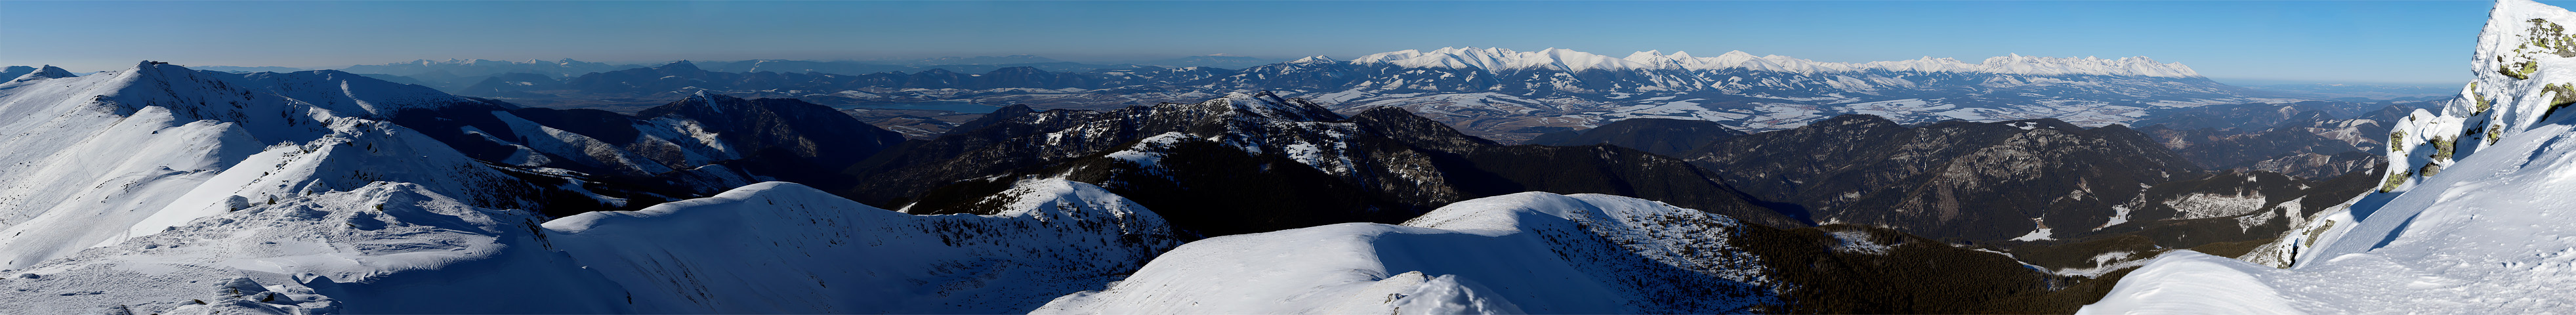 High Tatra mountains - panorama from Dumbier, Low Tatra mountains.